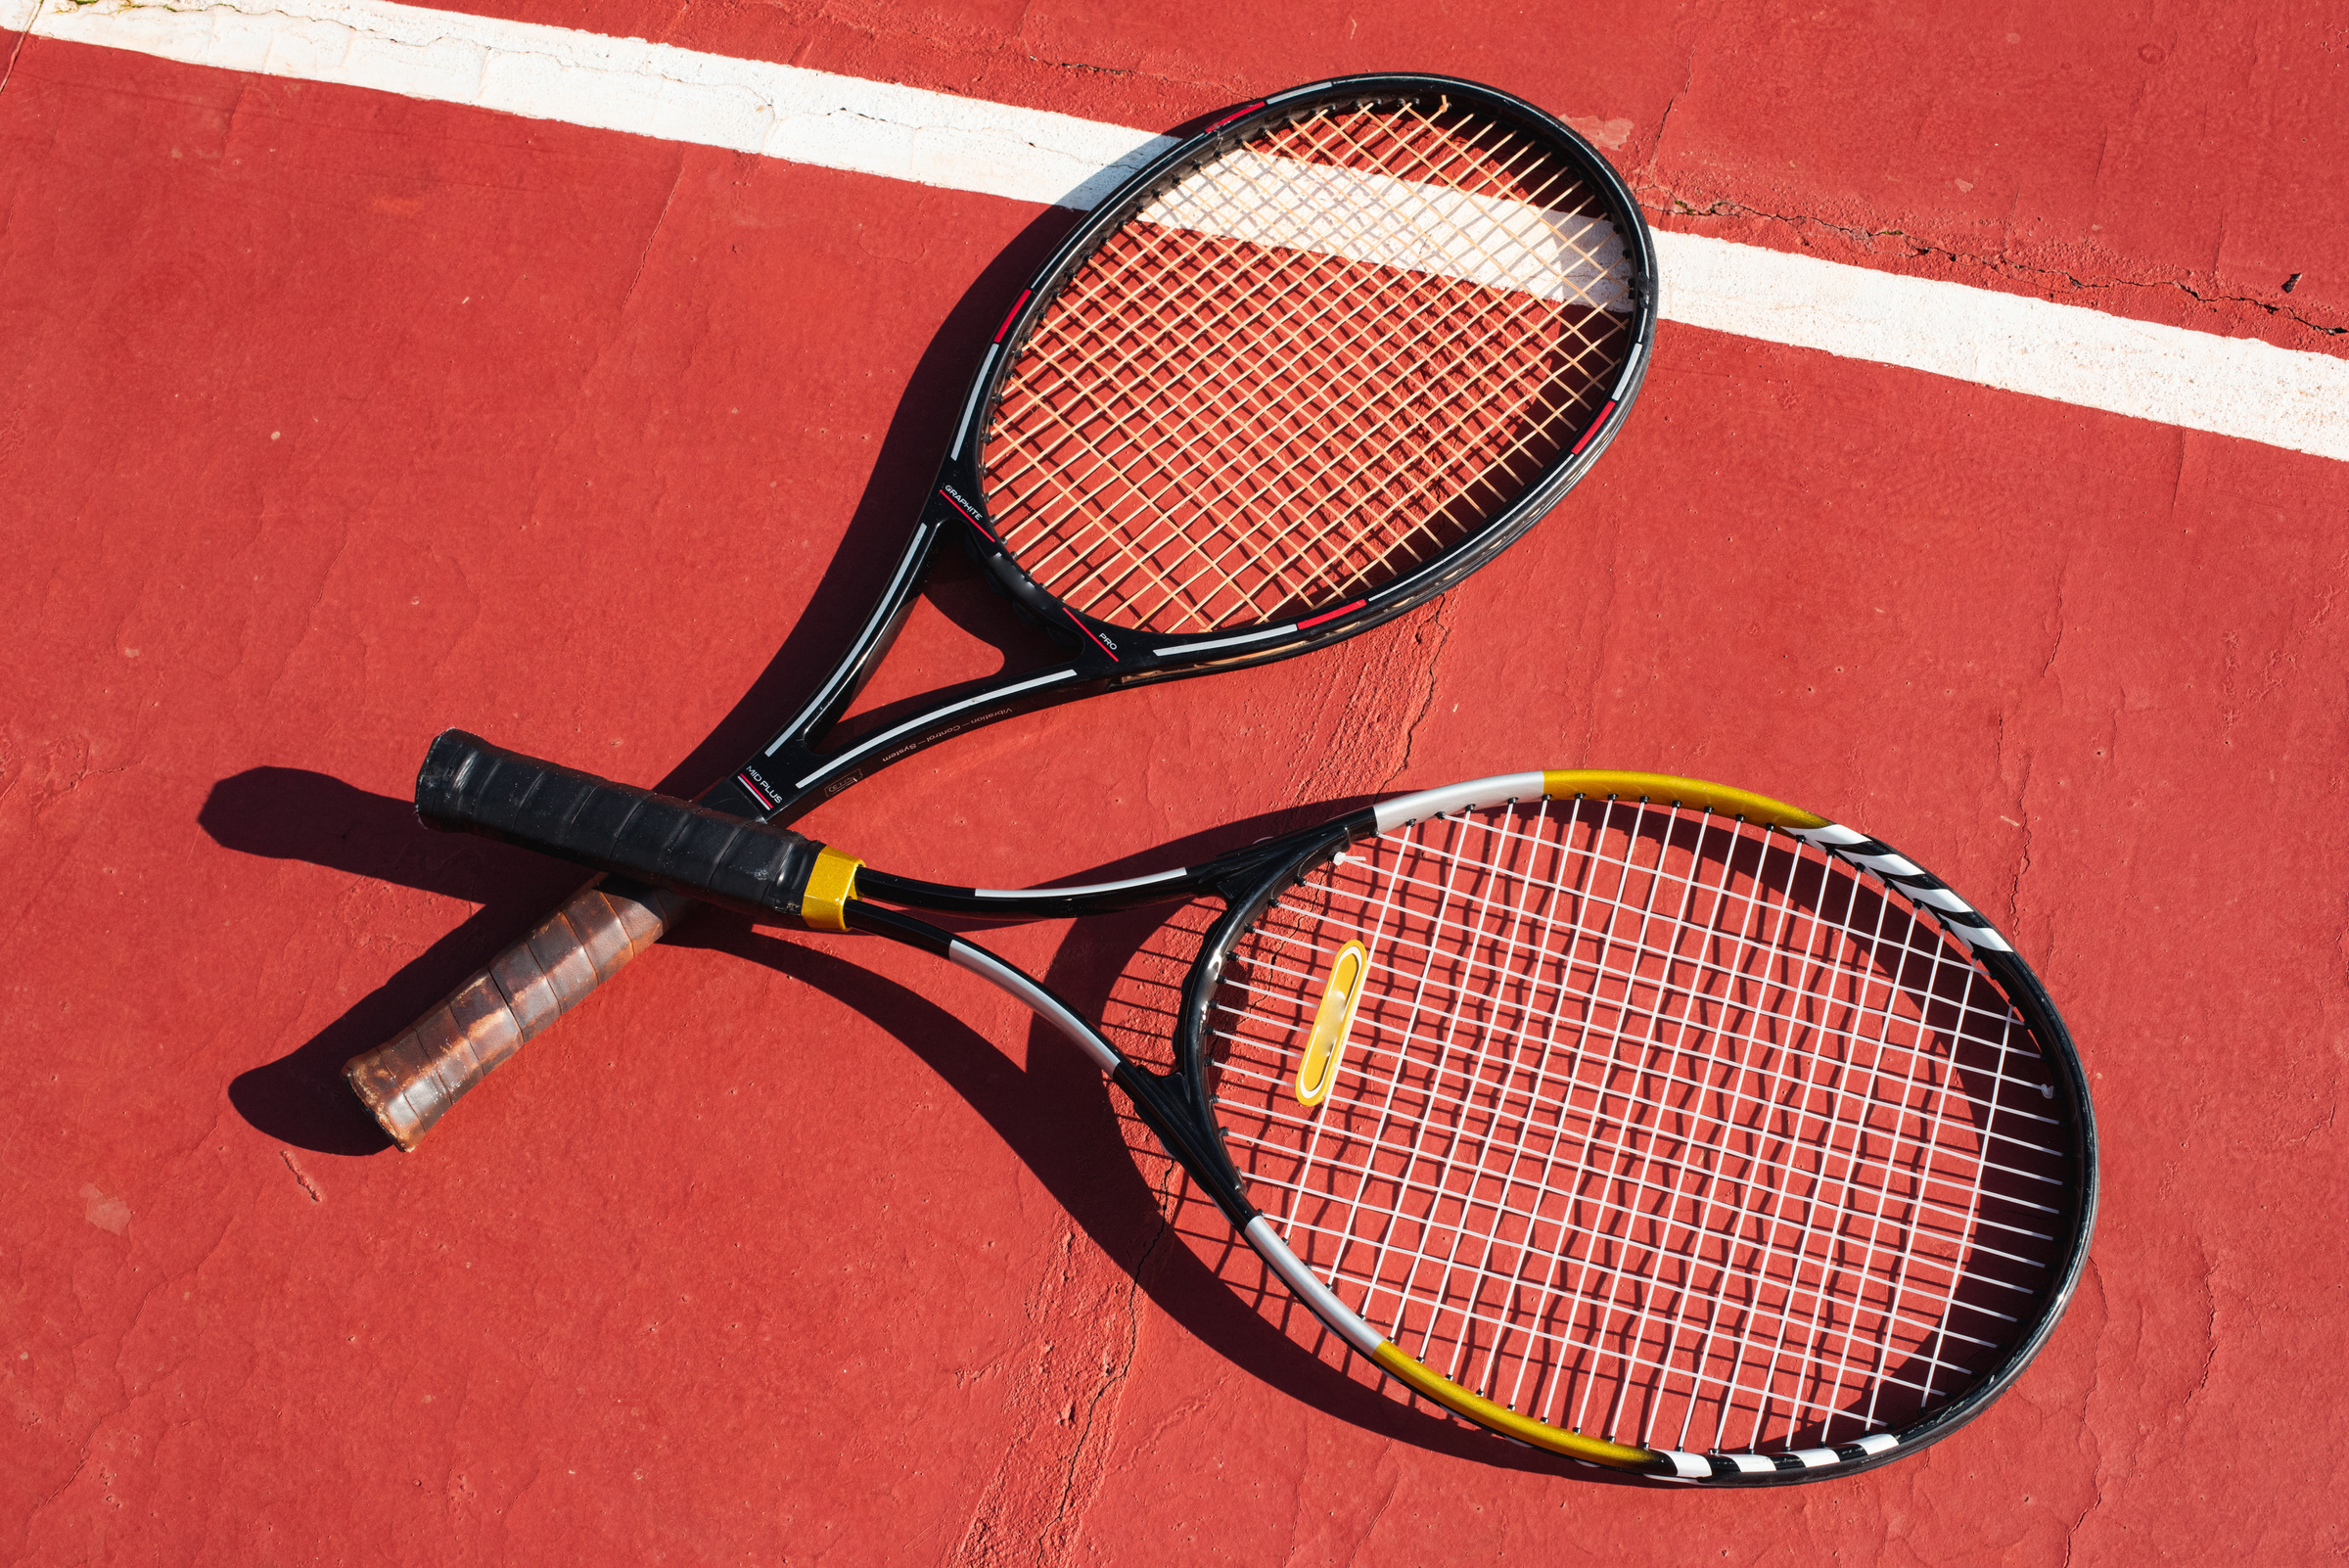 Tennis Rackets on Court